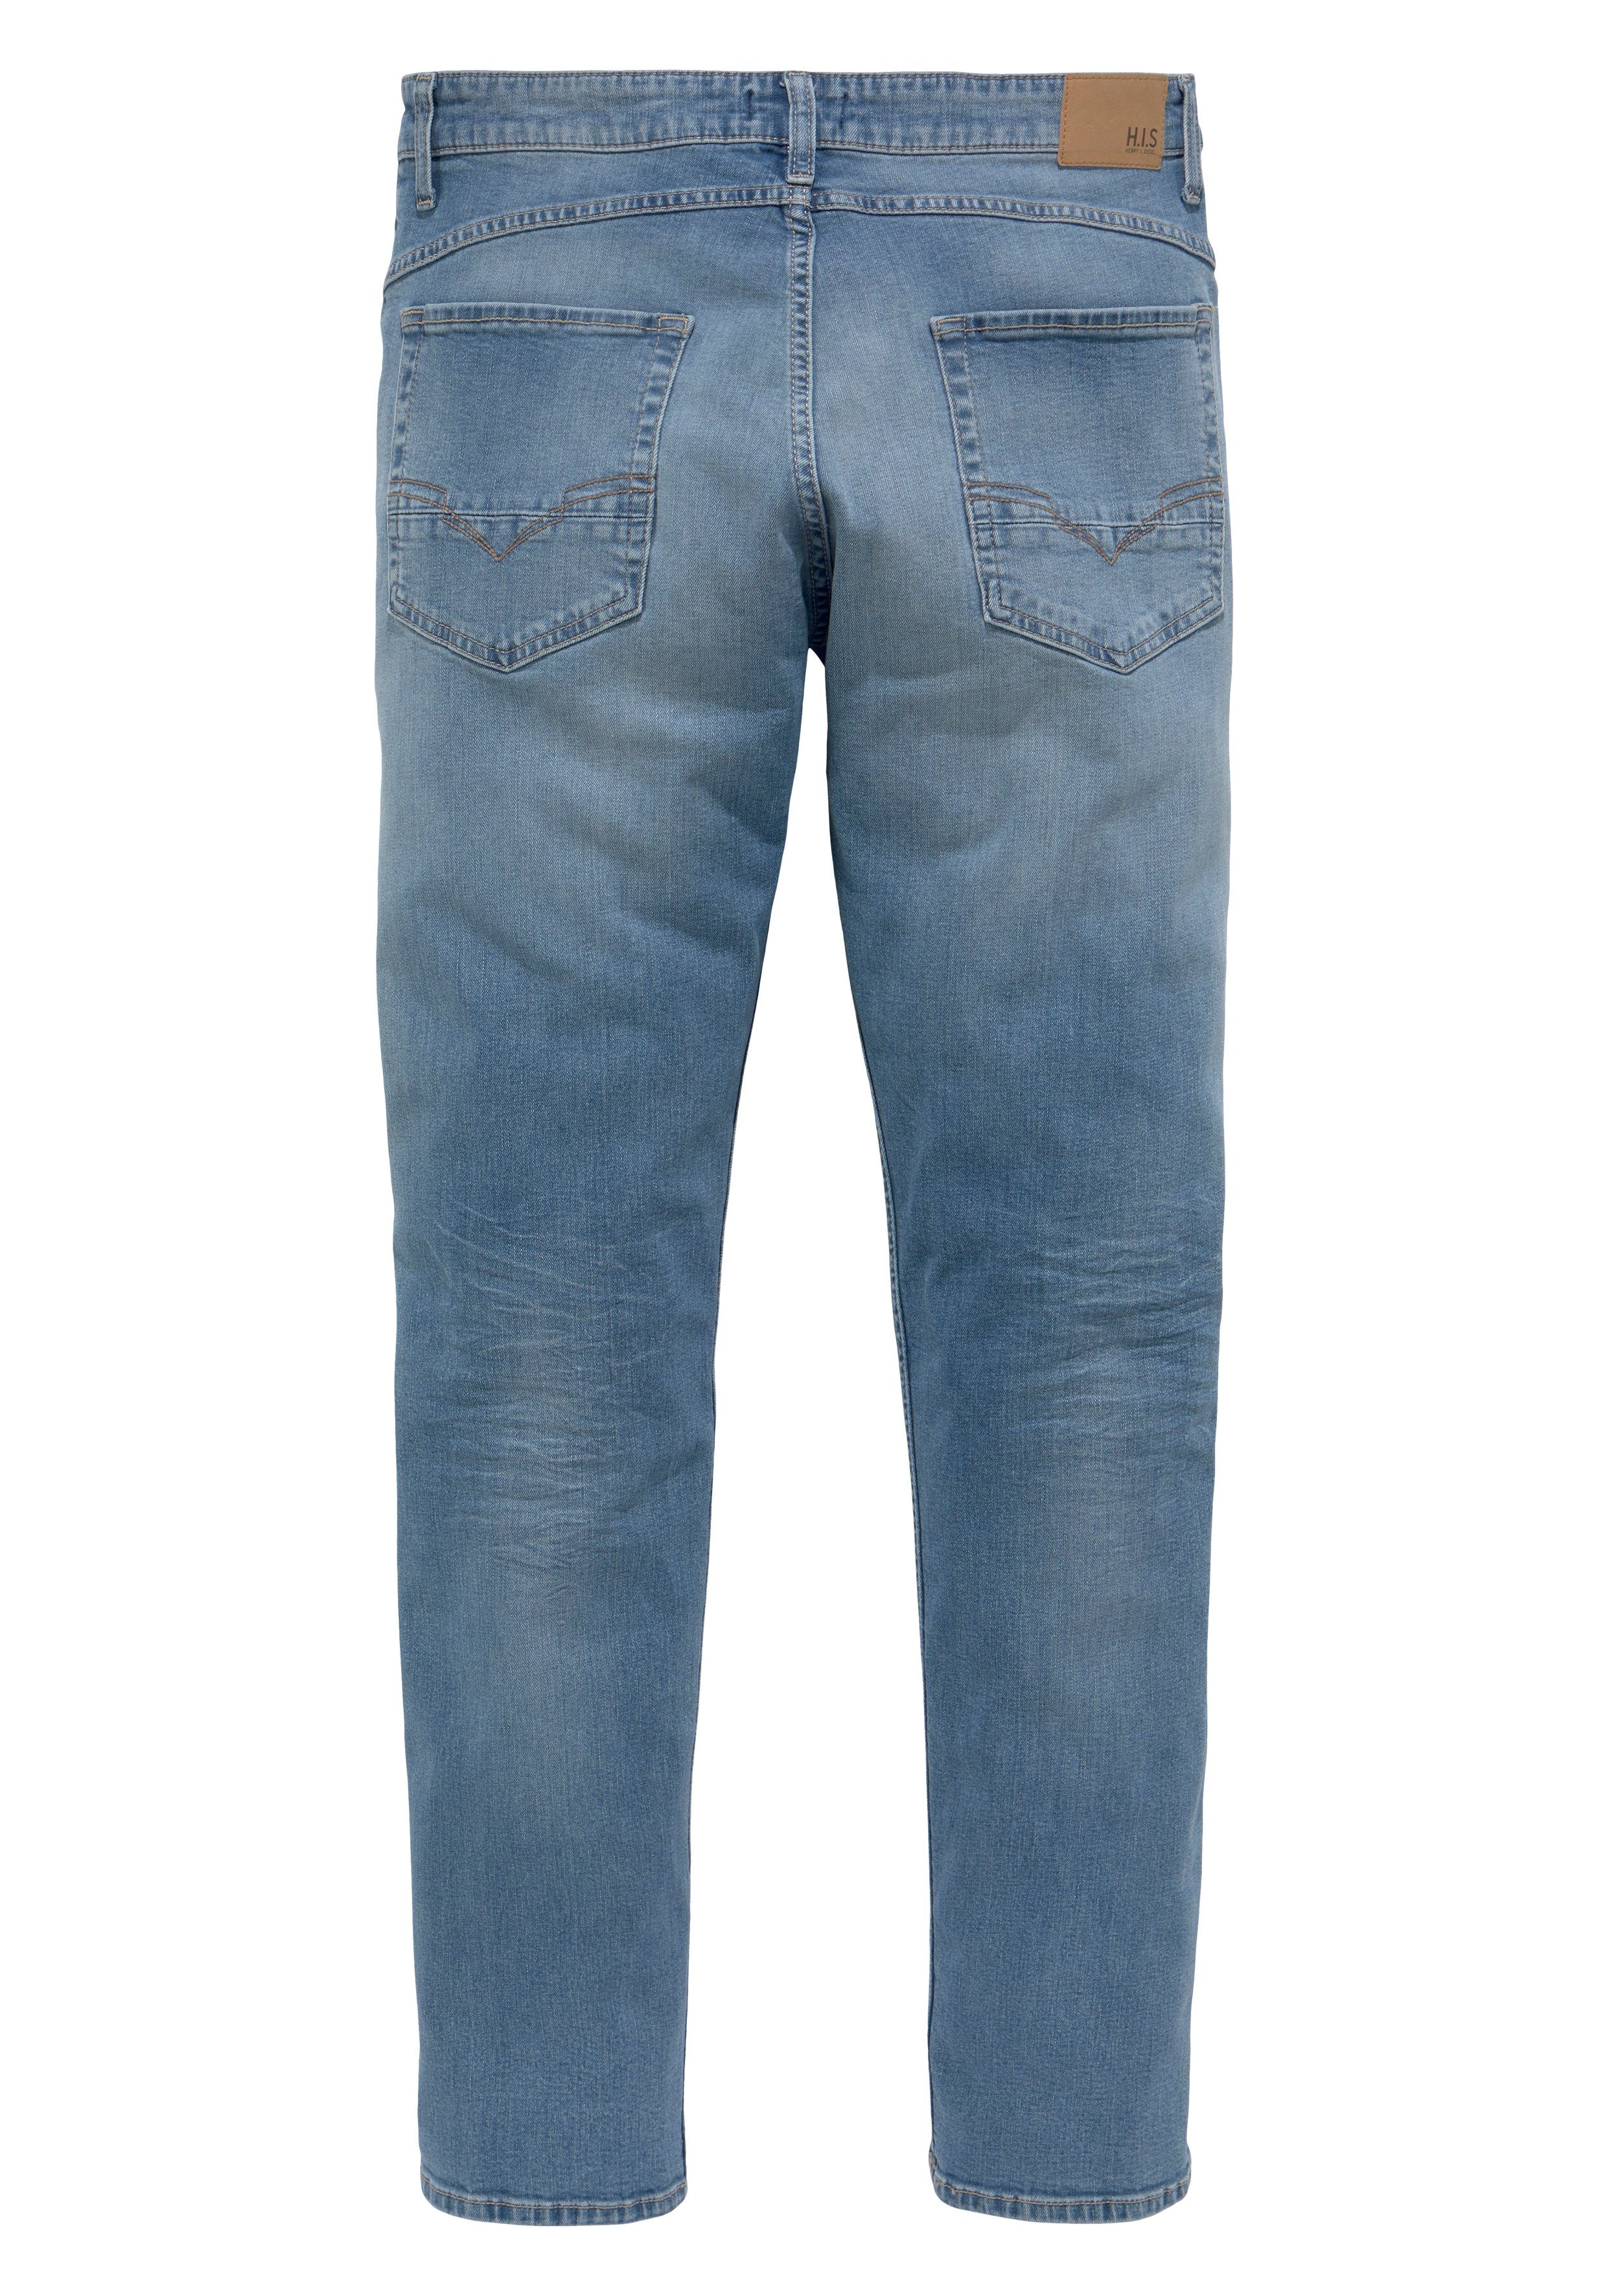 Produktion Wash CIAN H.I.S durch Ozon wassersparende Ökologische, blue-washed Tapered-fit-Jeans